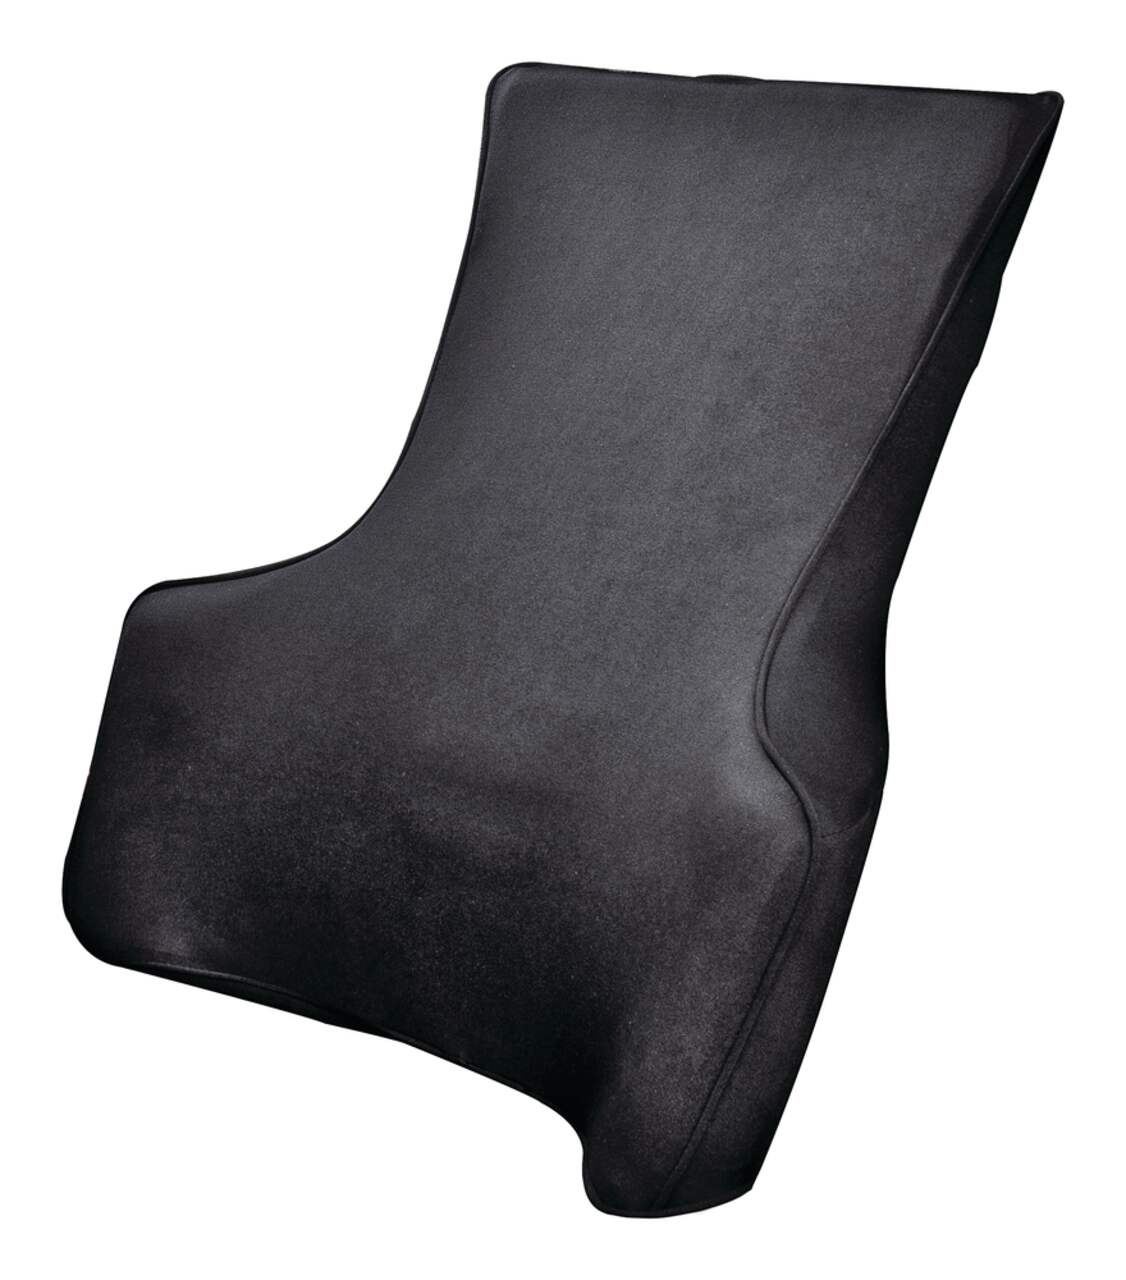 AutoTrends Premium Lumbar Lower Back Support Cushion